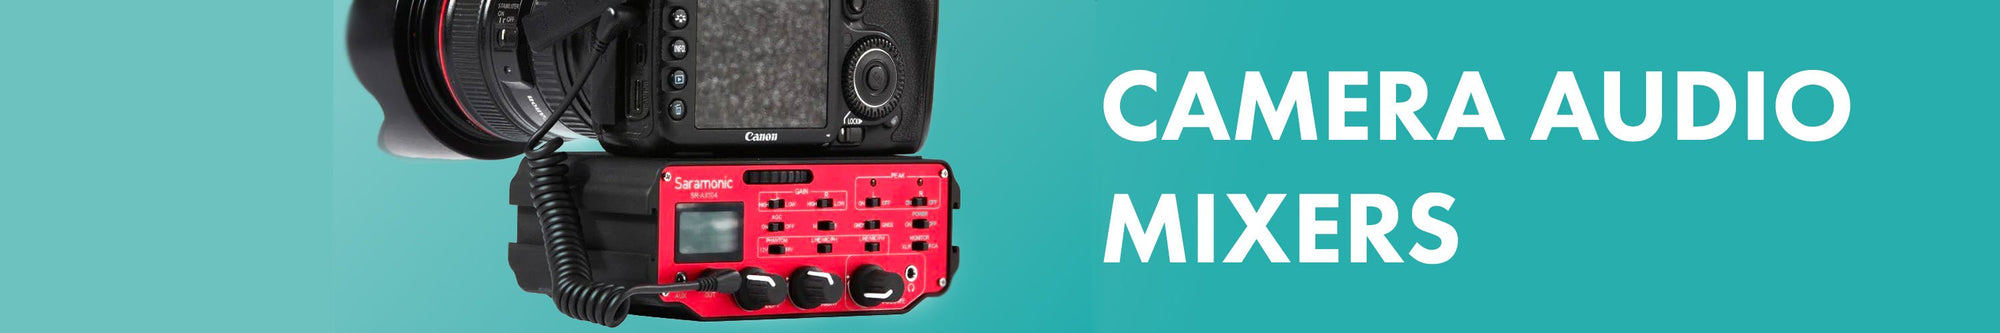 Camera Audio Mixers